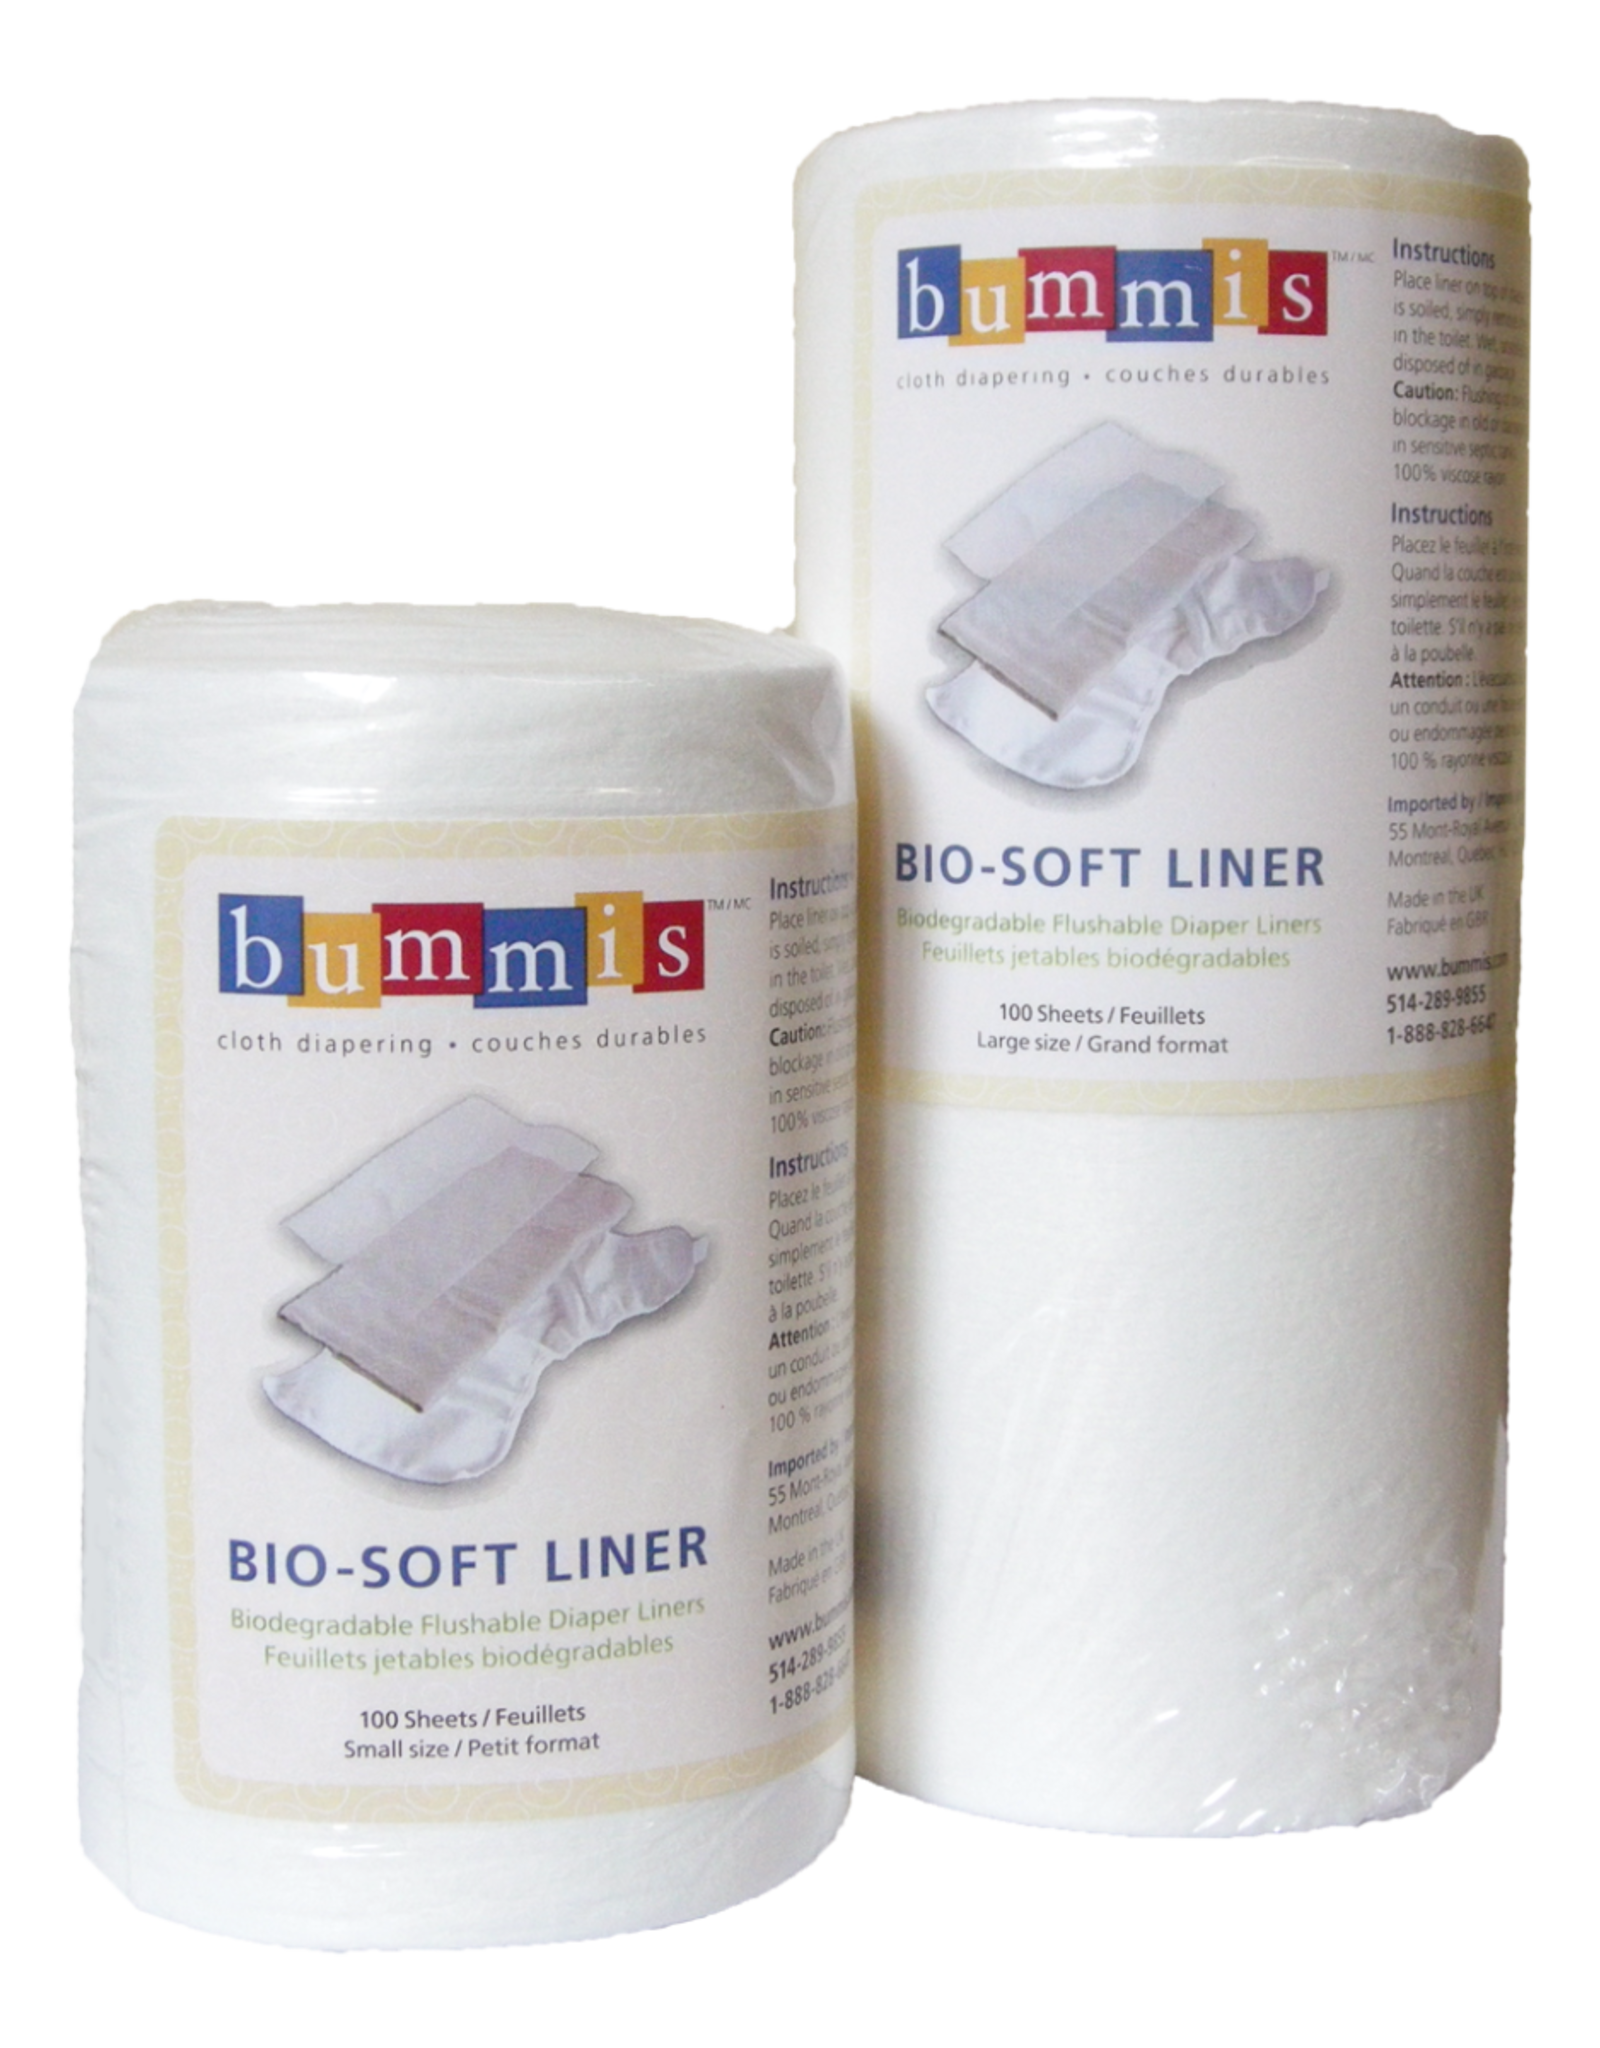 Bummis Bio-Soft Liner - Large Size - 100 sheets